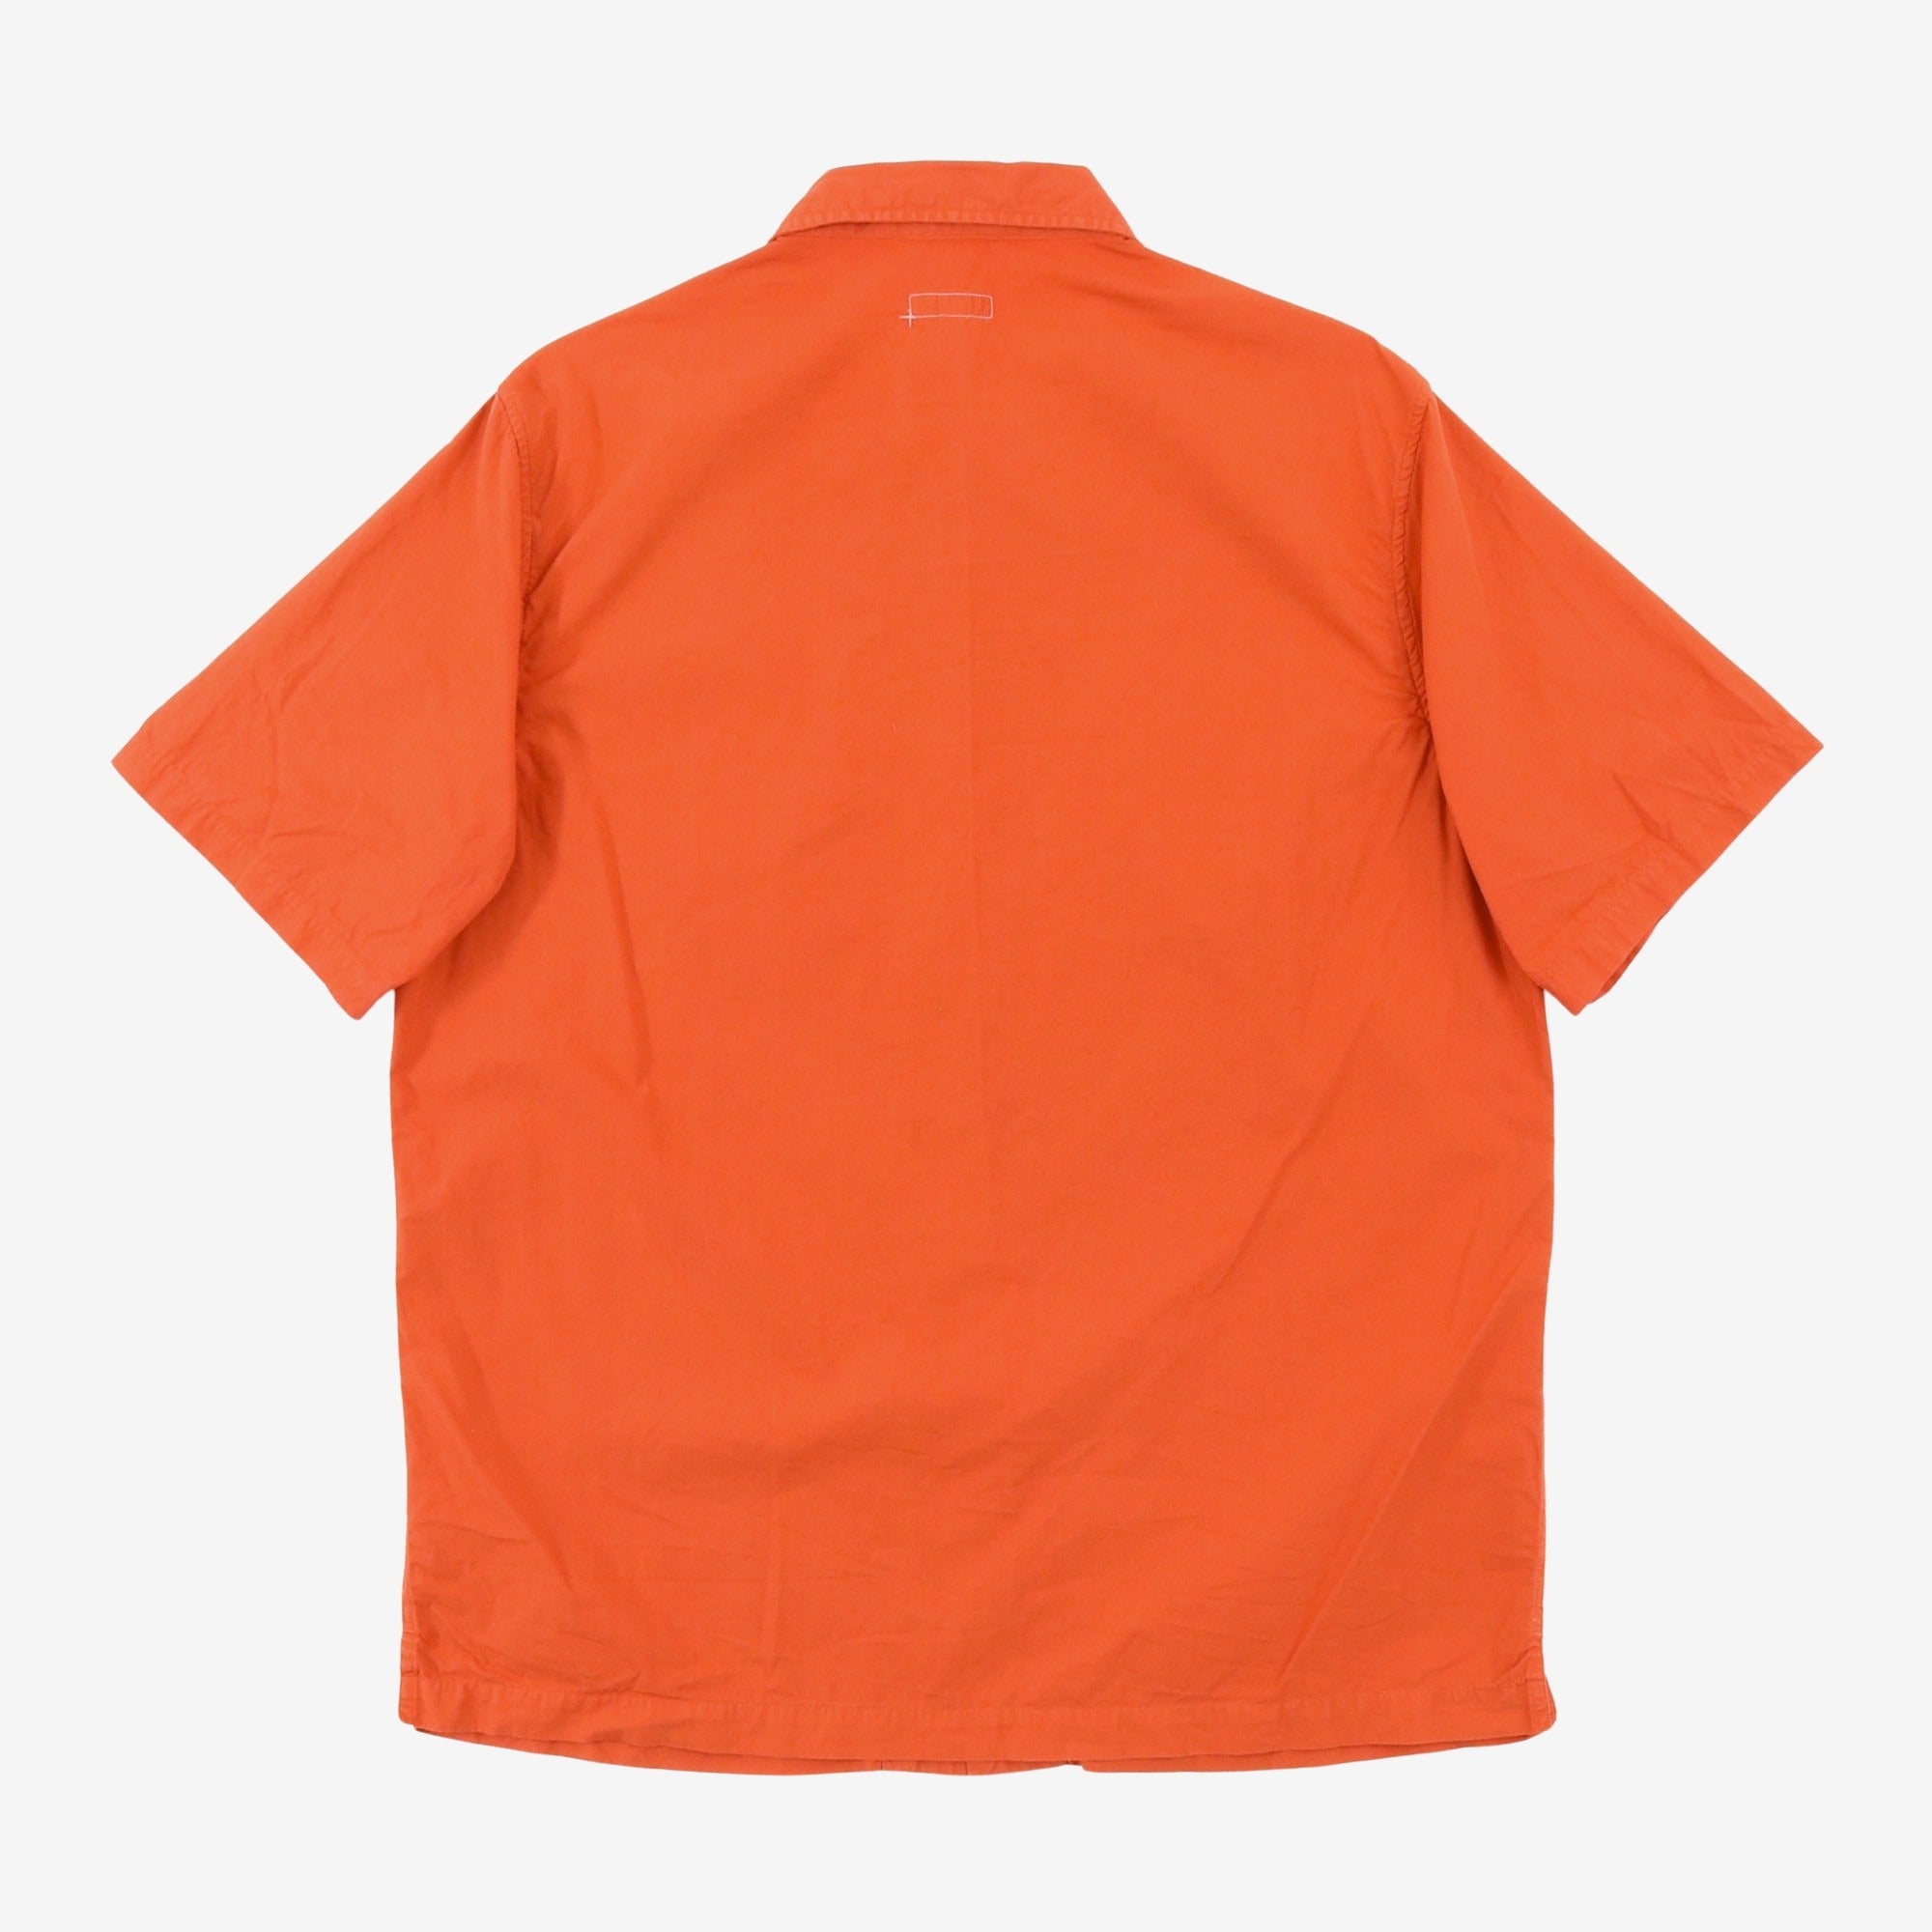 Comma Camp Shirt